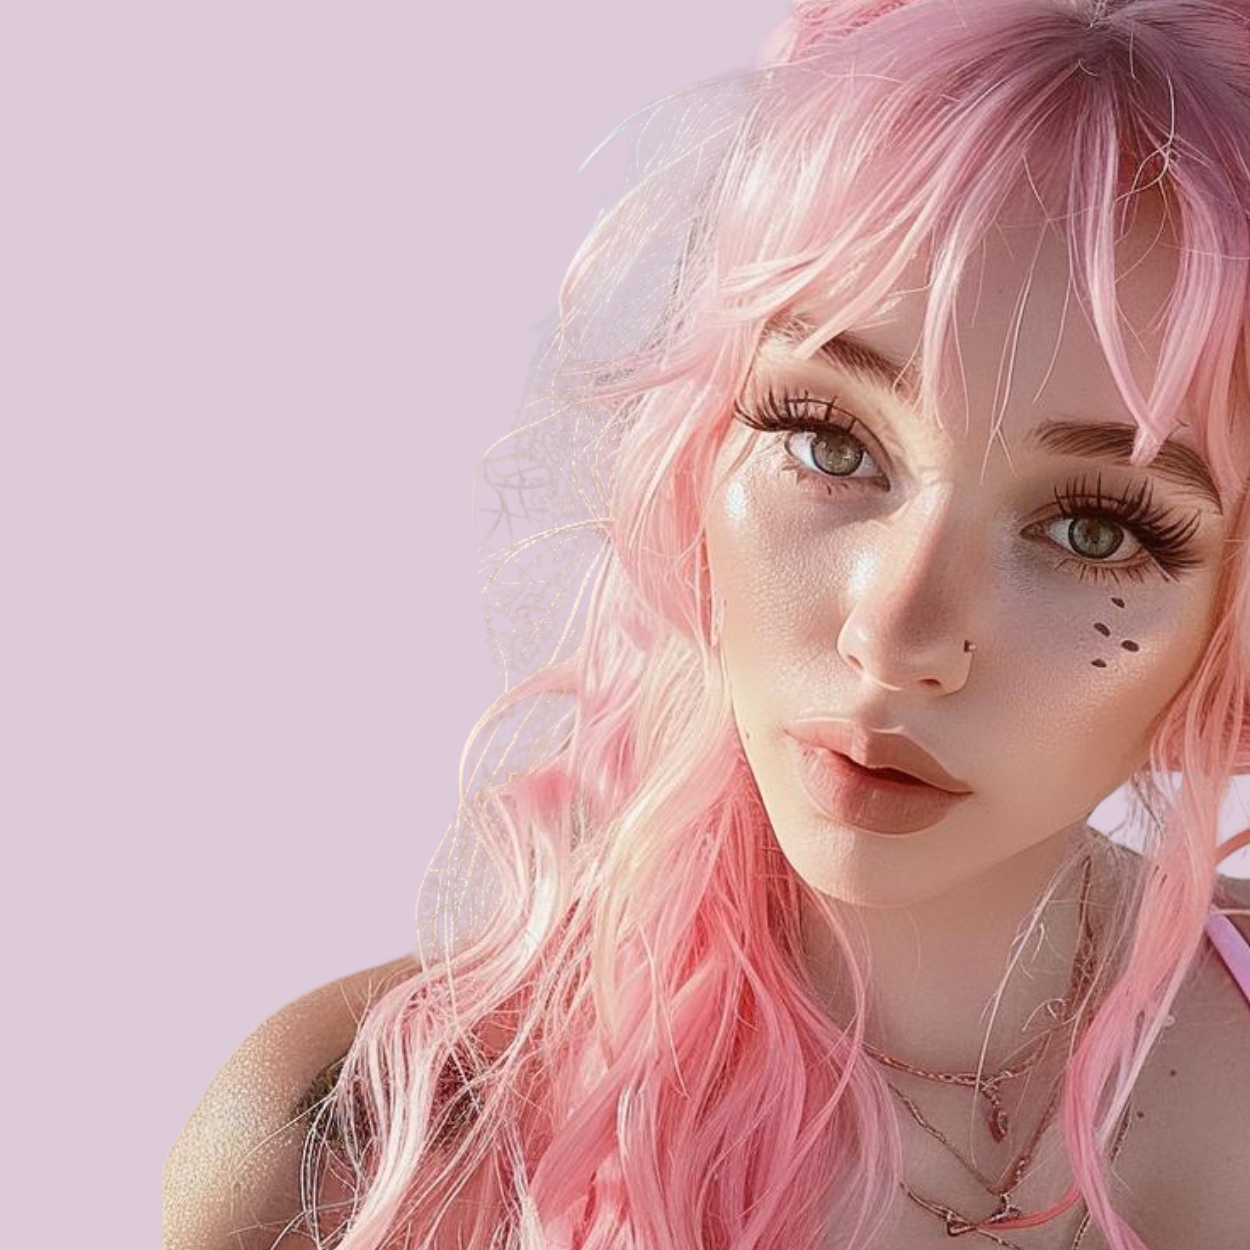 Woman with pink hair wearing false eyelashes